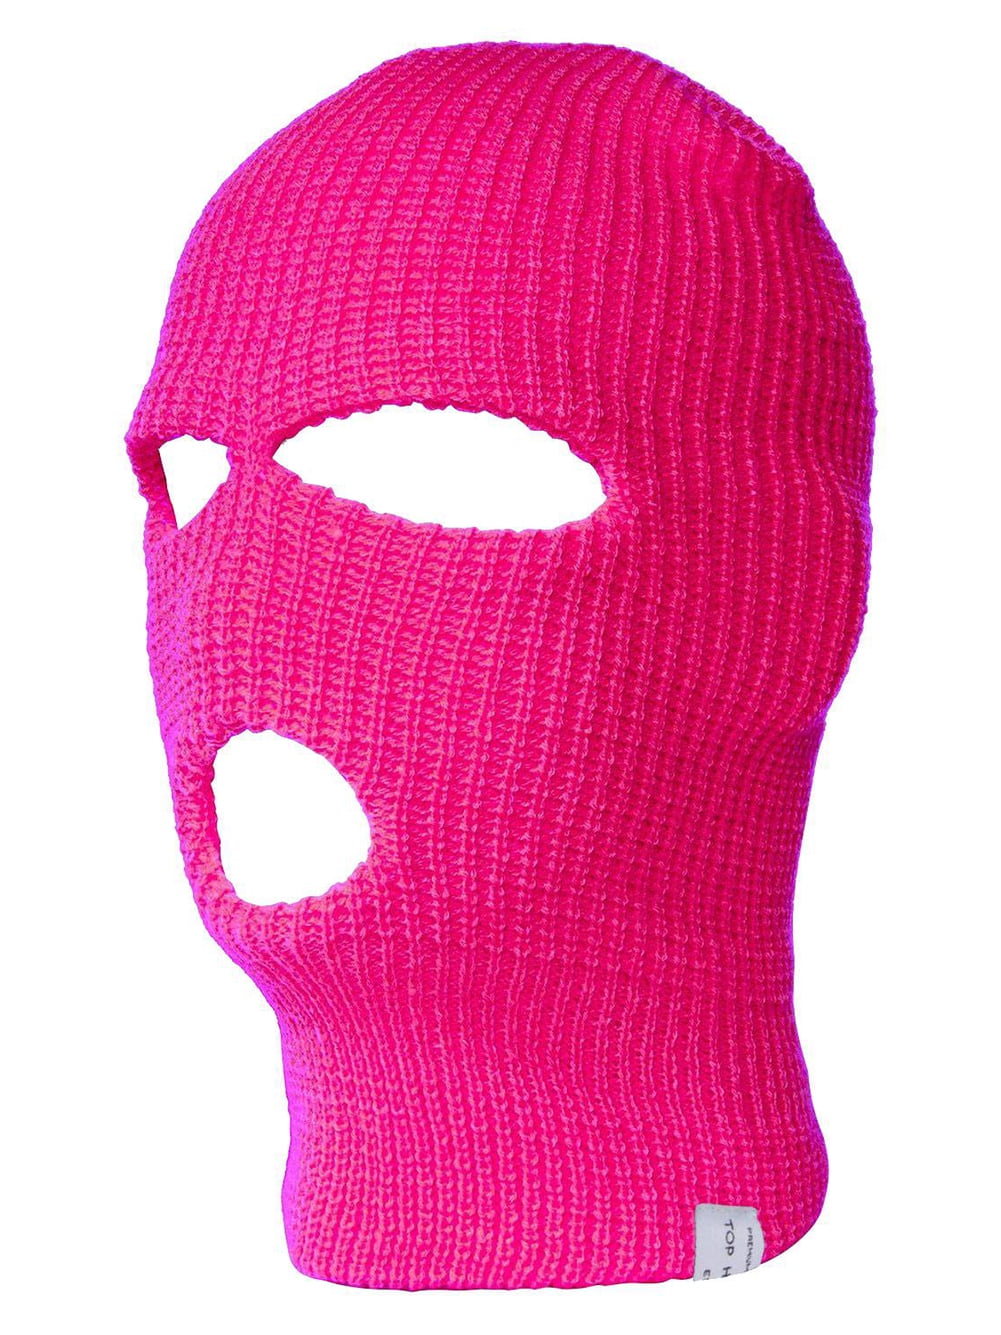 Accessories, Pink Lv Ski Mask